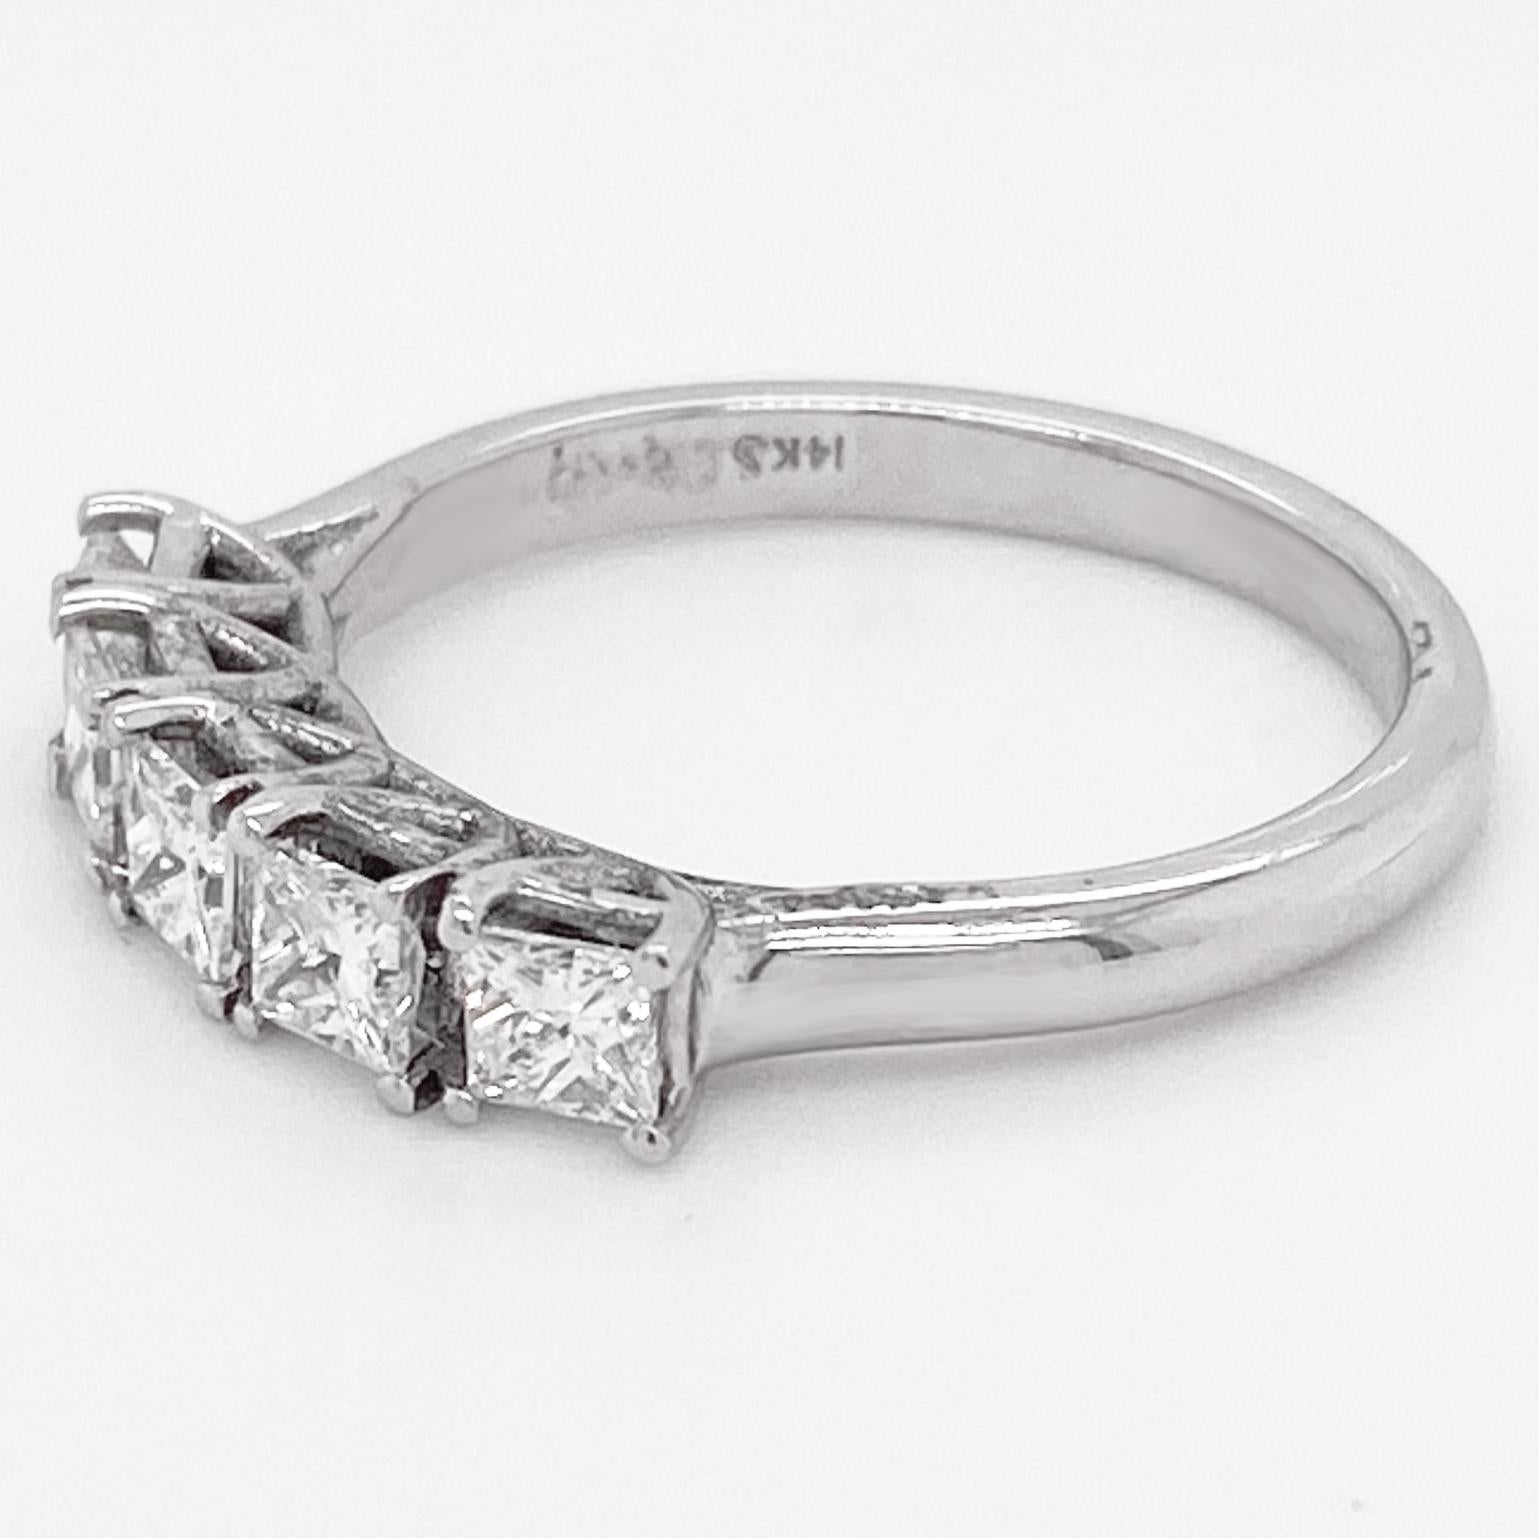 princess cut diamond ring with infinity band